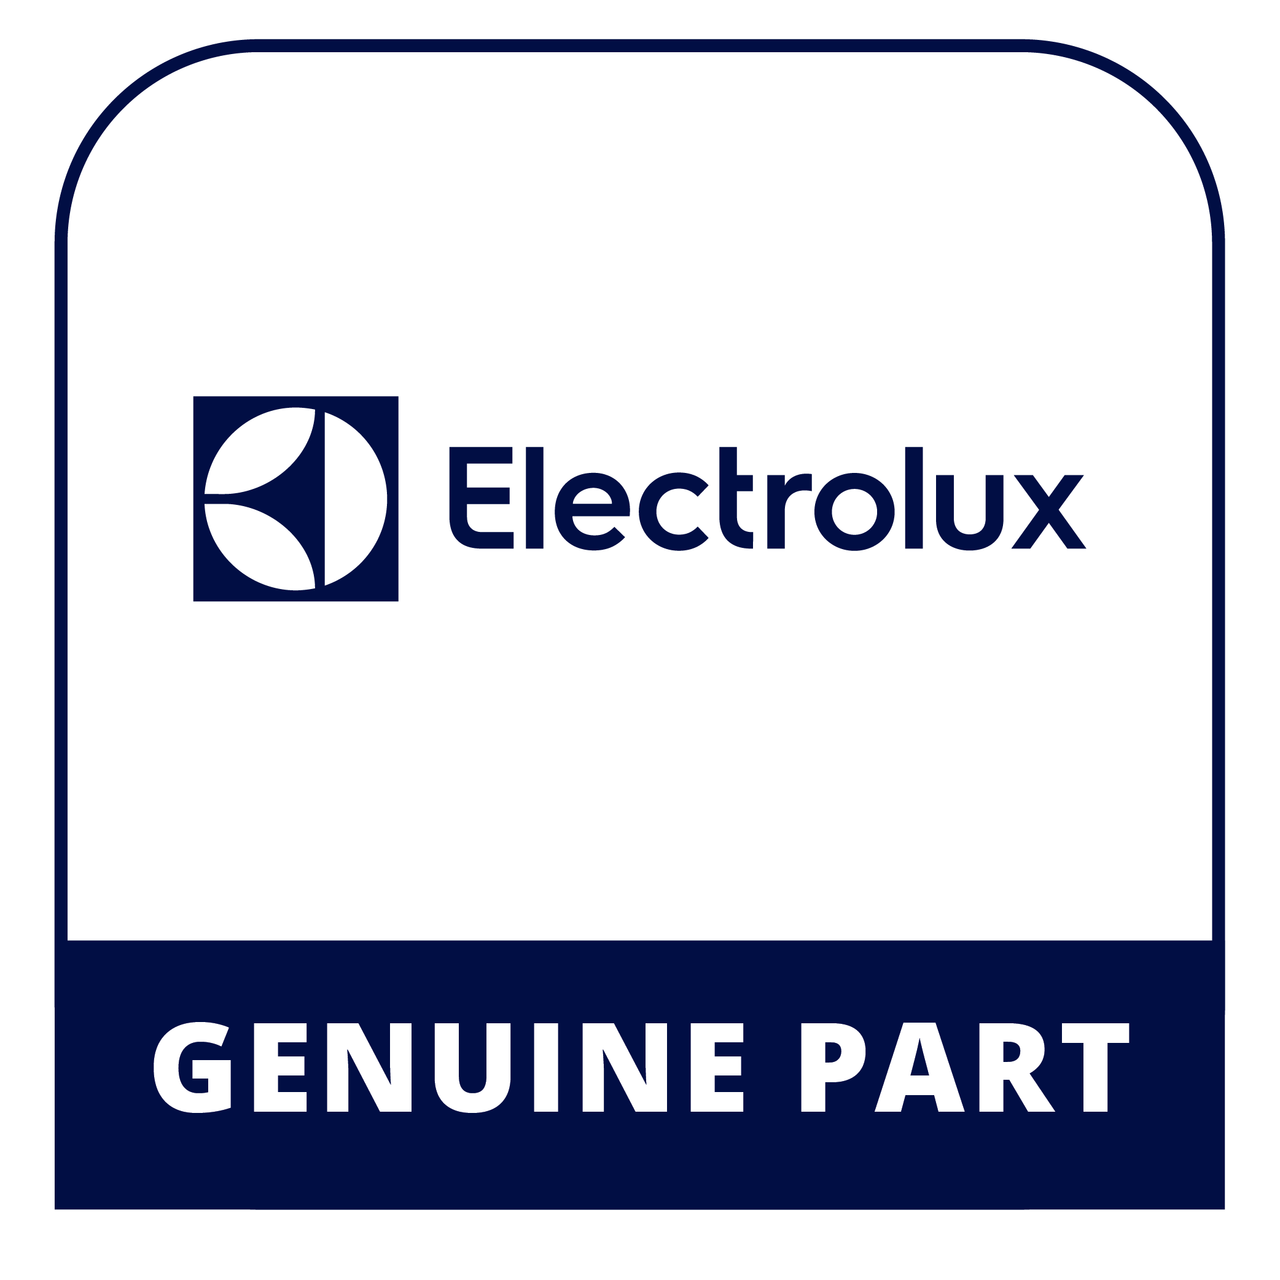 Frigidaire - Electrolux 240494001 - Button - Genuine Electrolux Part